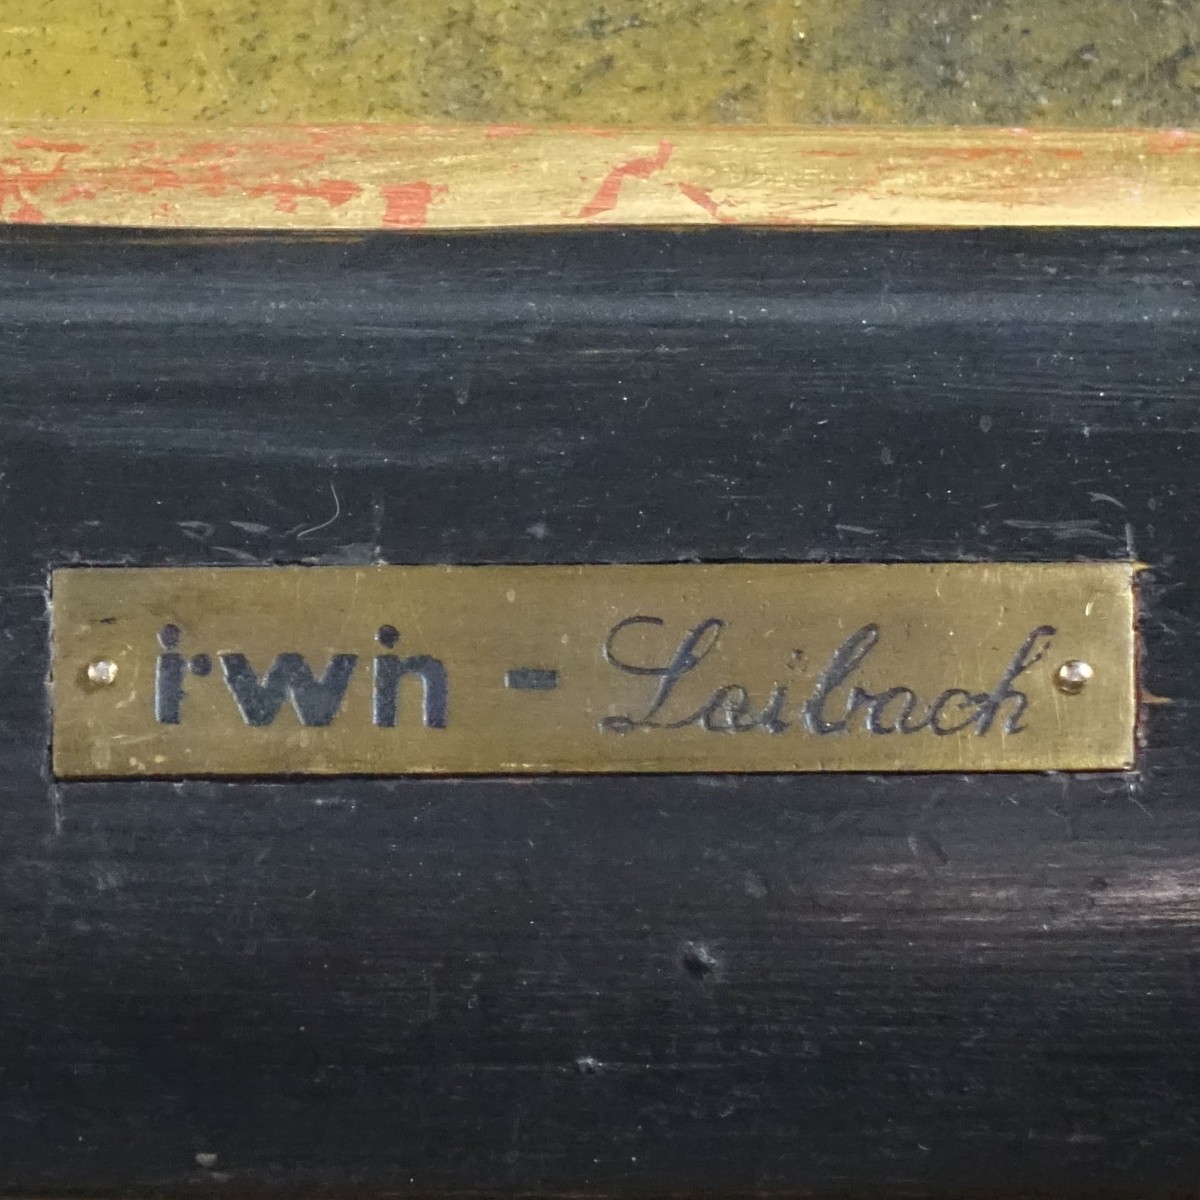 Irwin - Laibach (20th C.)